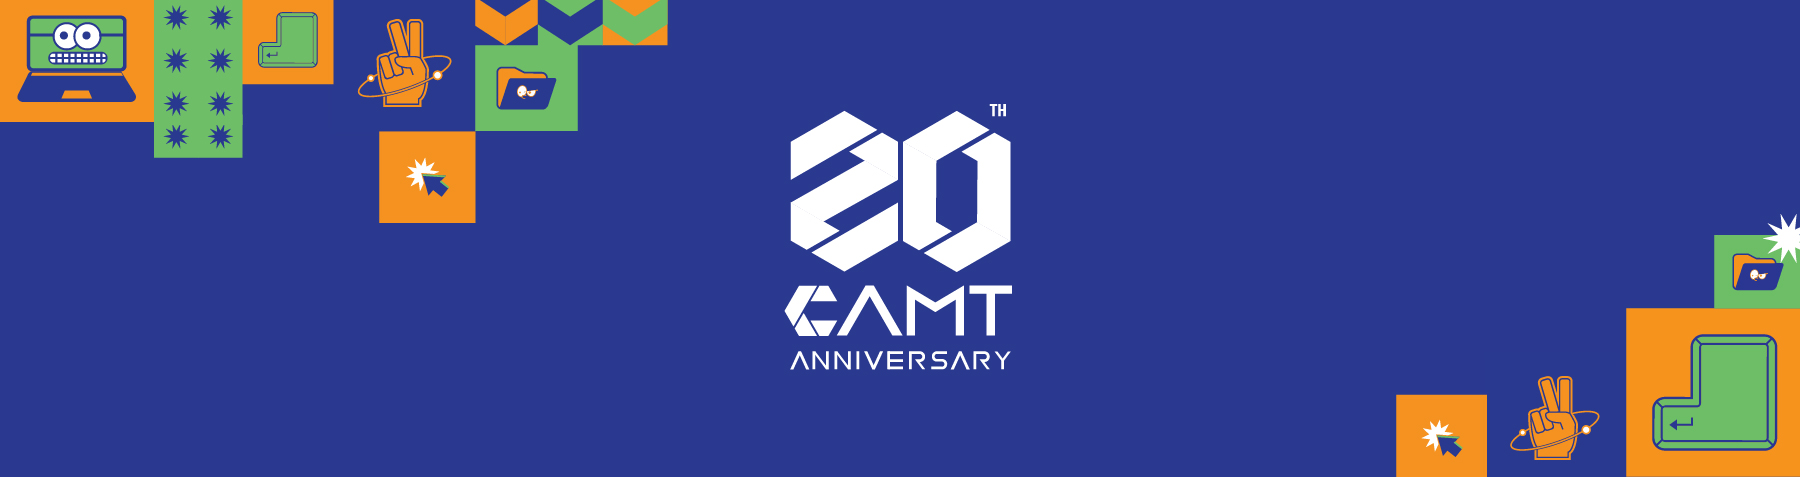 CAMT66-01